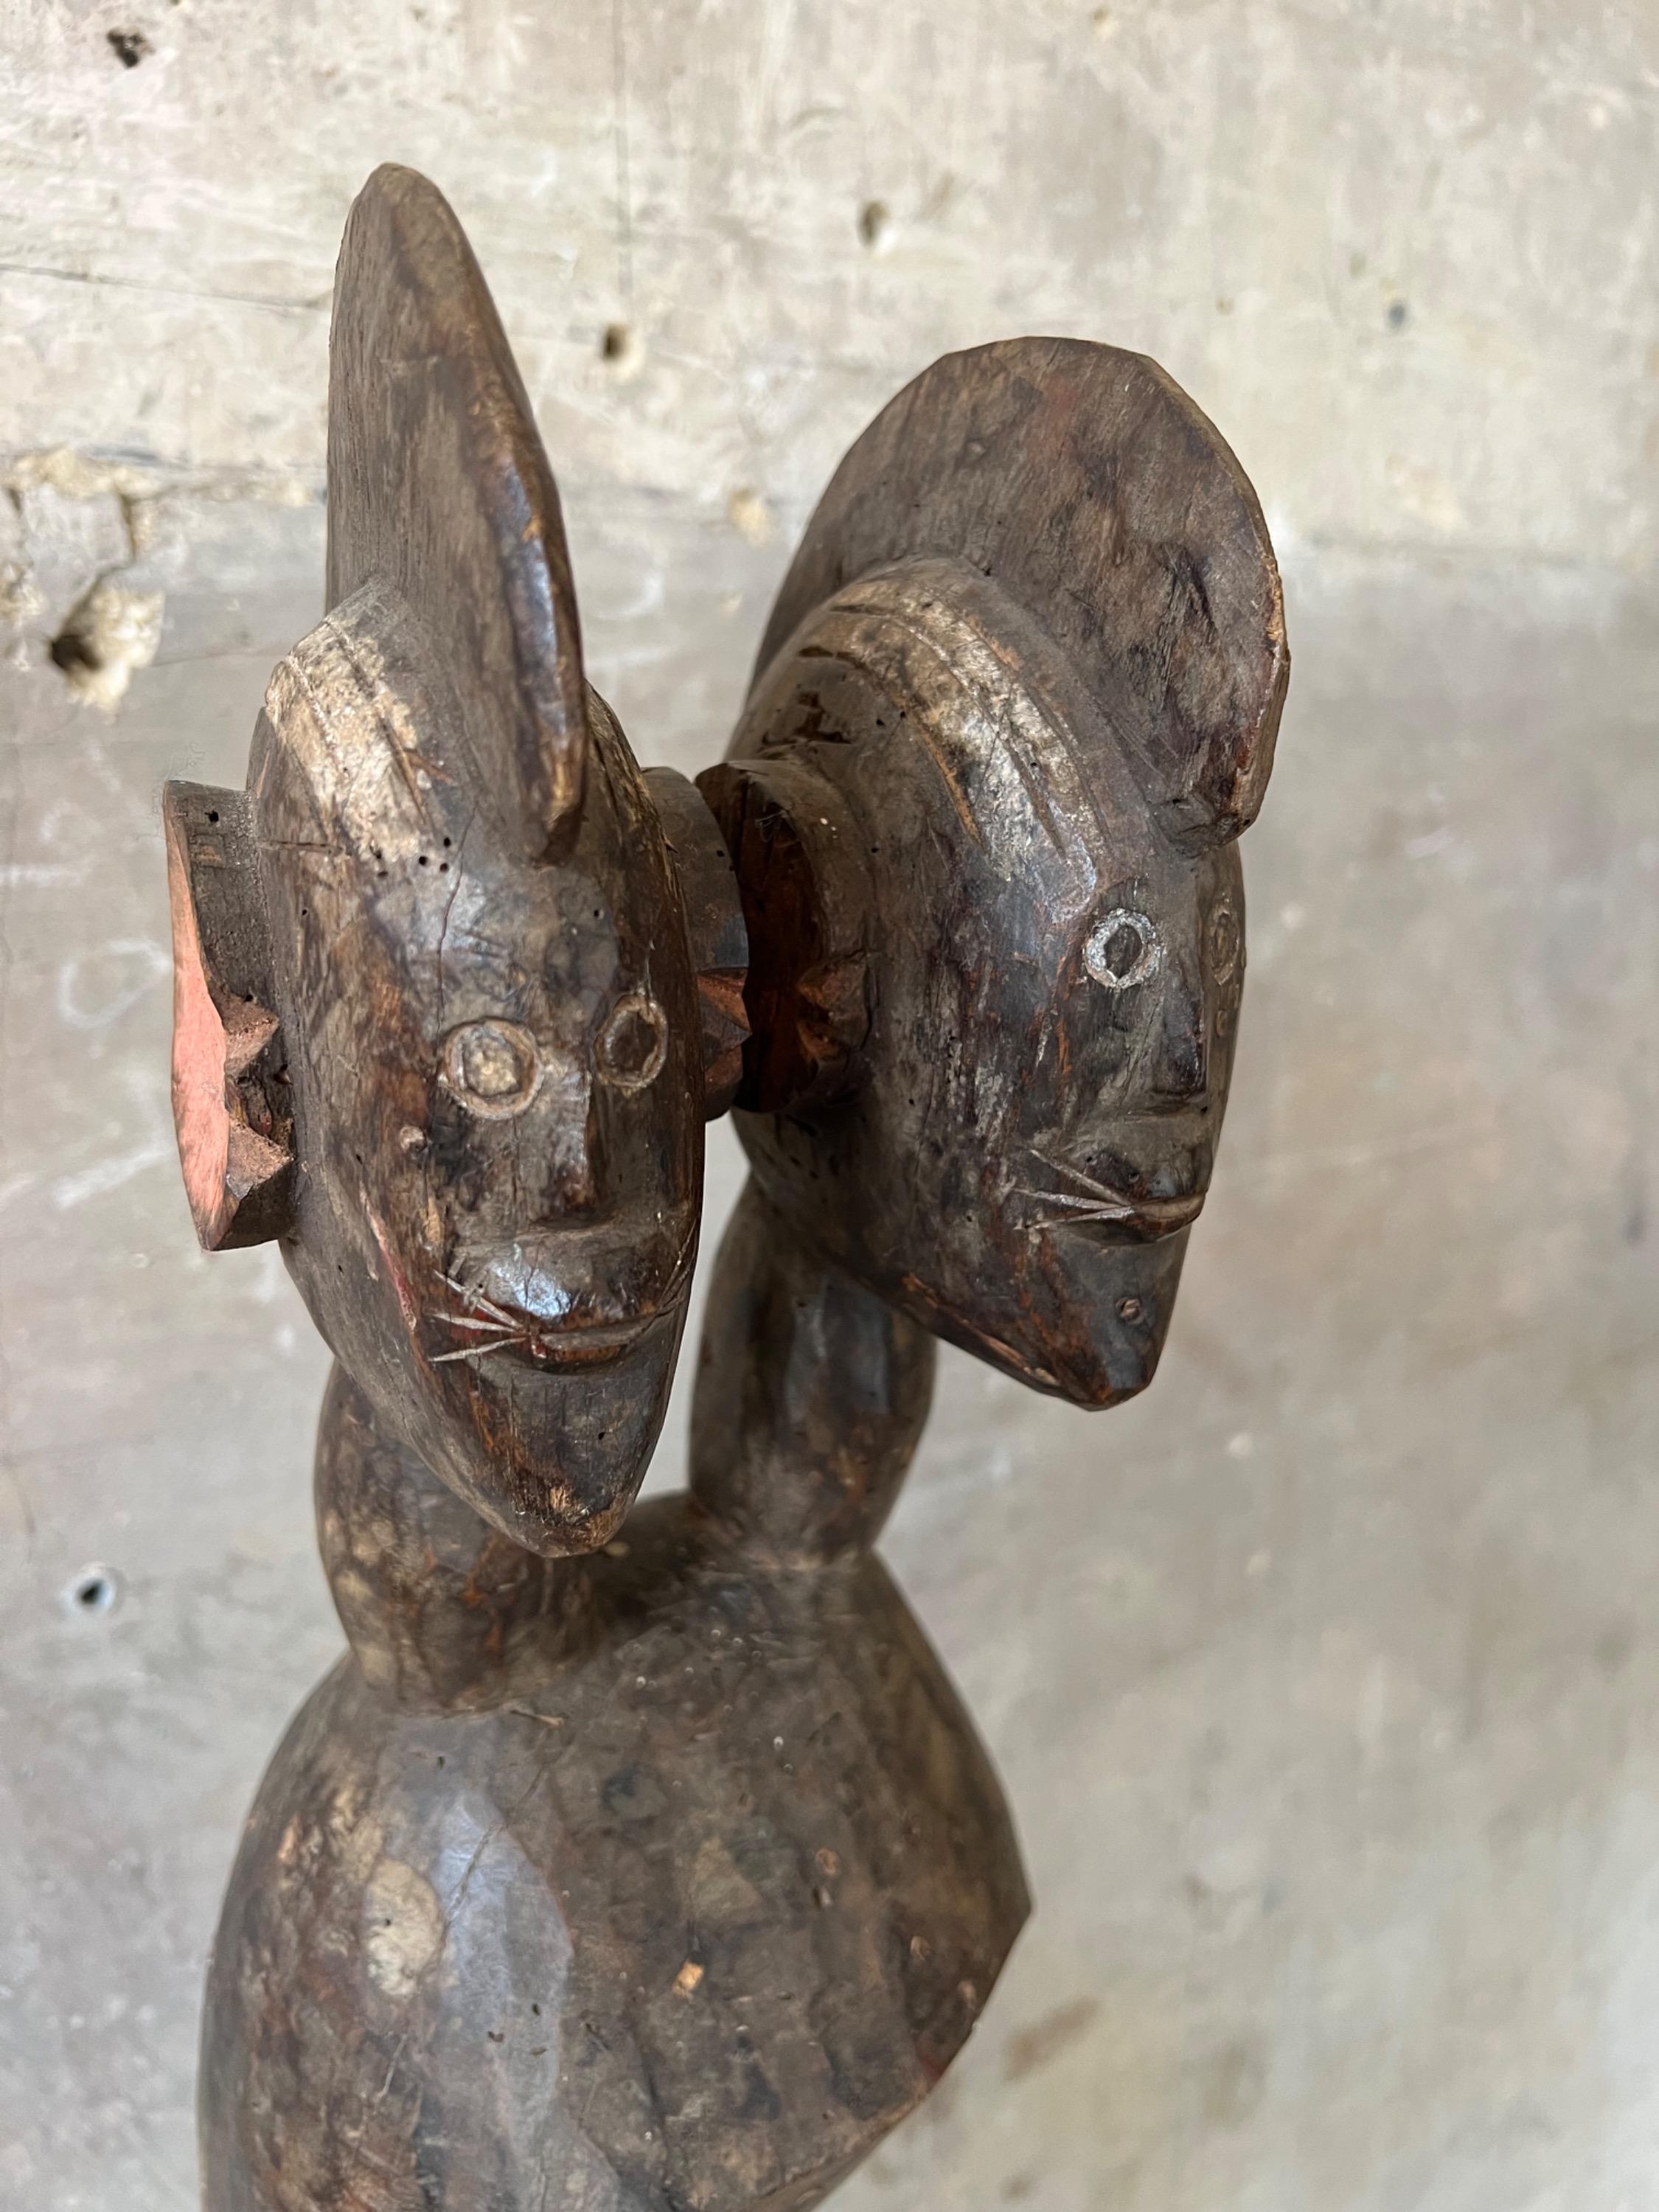 Big Mumuye Alagana Statues, Nigeria Bénue Valley. H = 120 / 110 / 98 cm